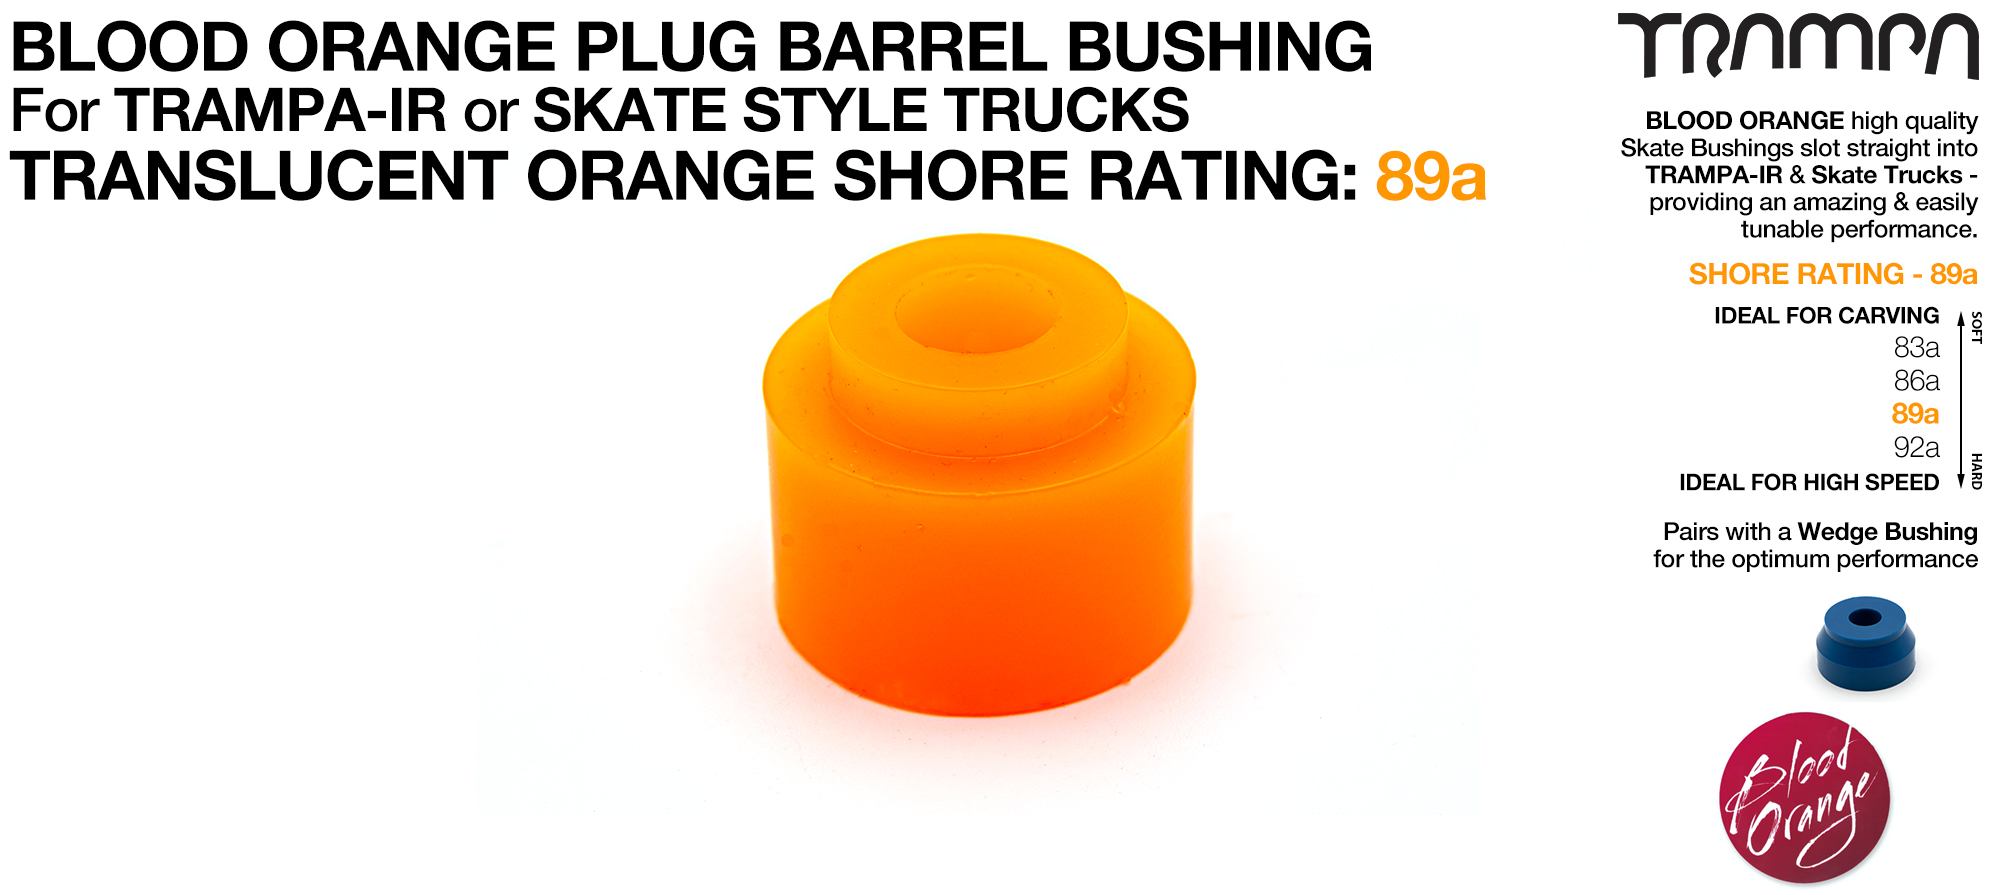 Blood Orange PLUG BARREL - Translucent ORANGE 89a